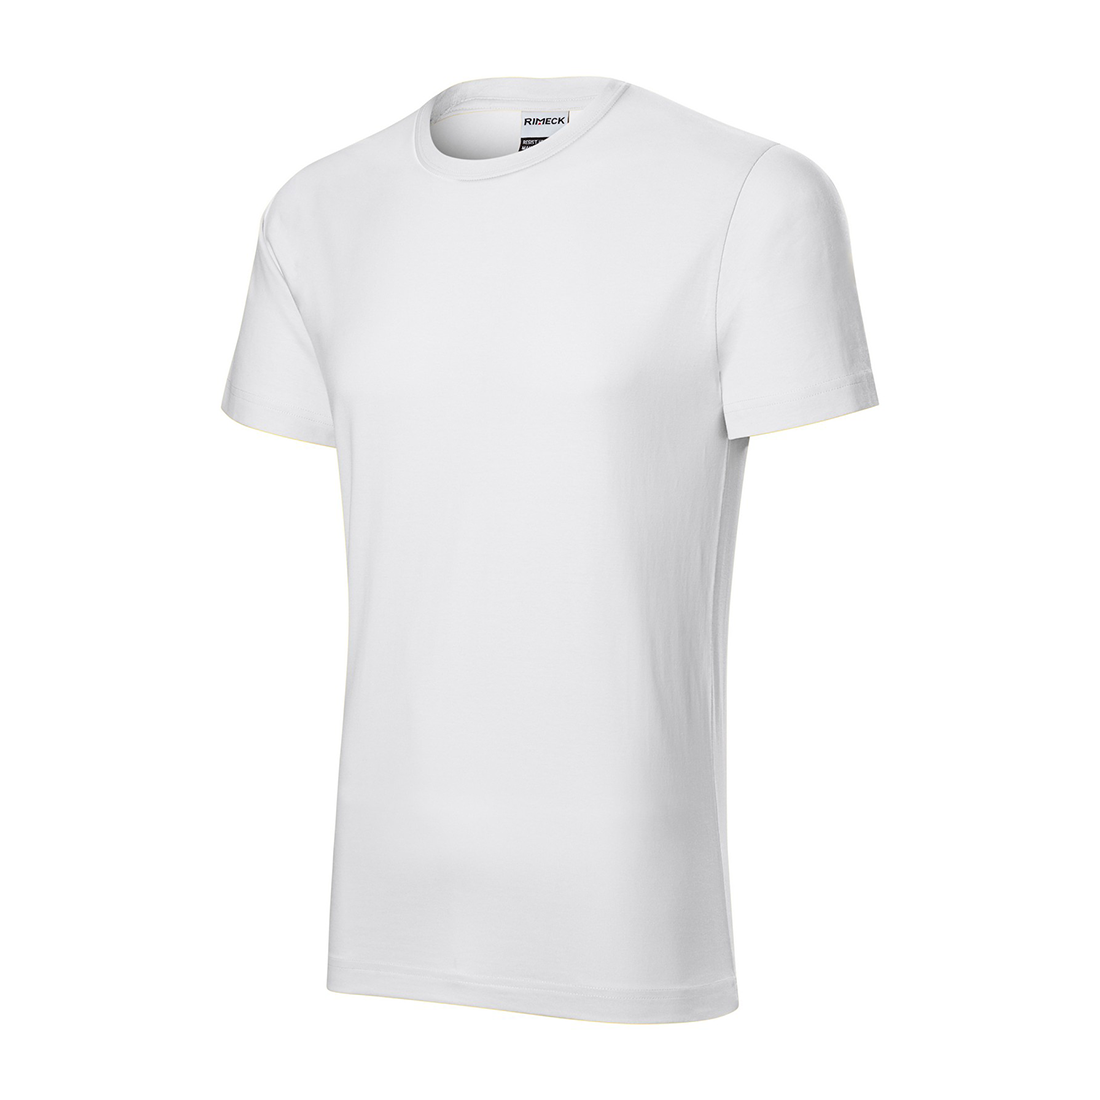 Men's Pre-shrunk Cotton T-shirt - Safetywear